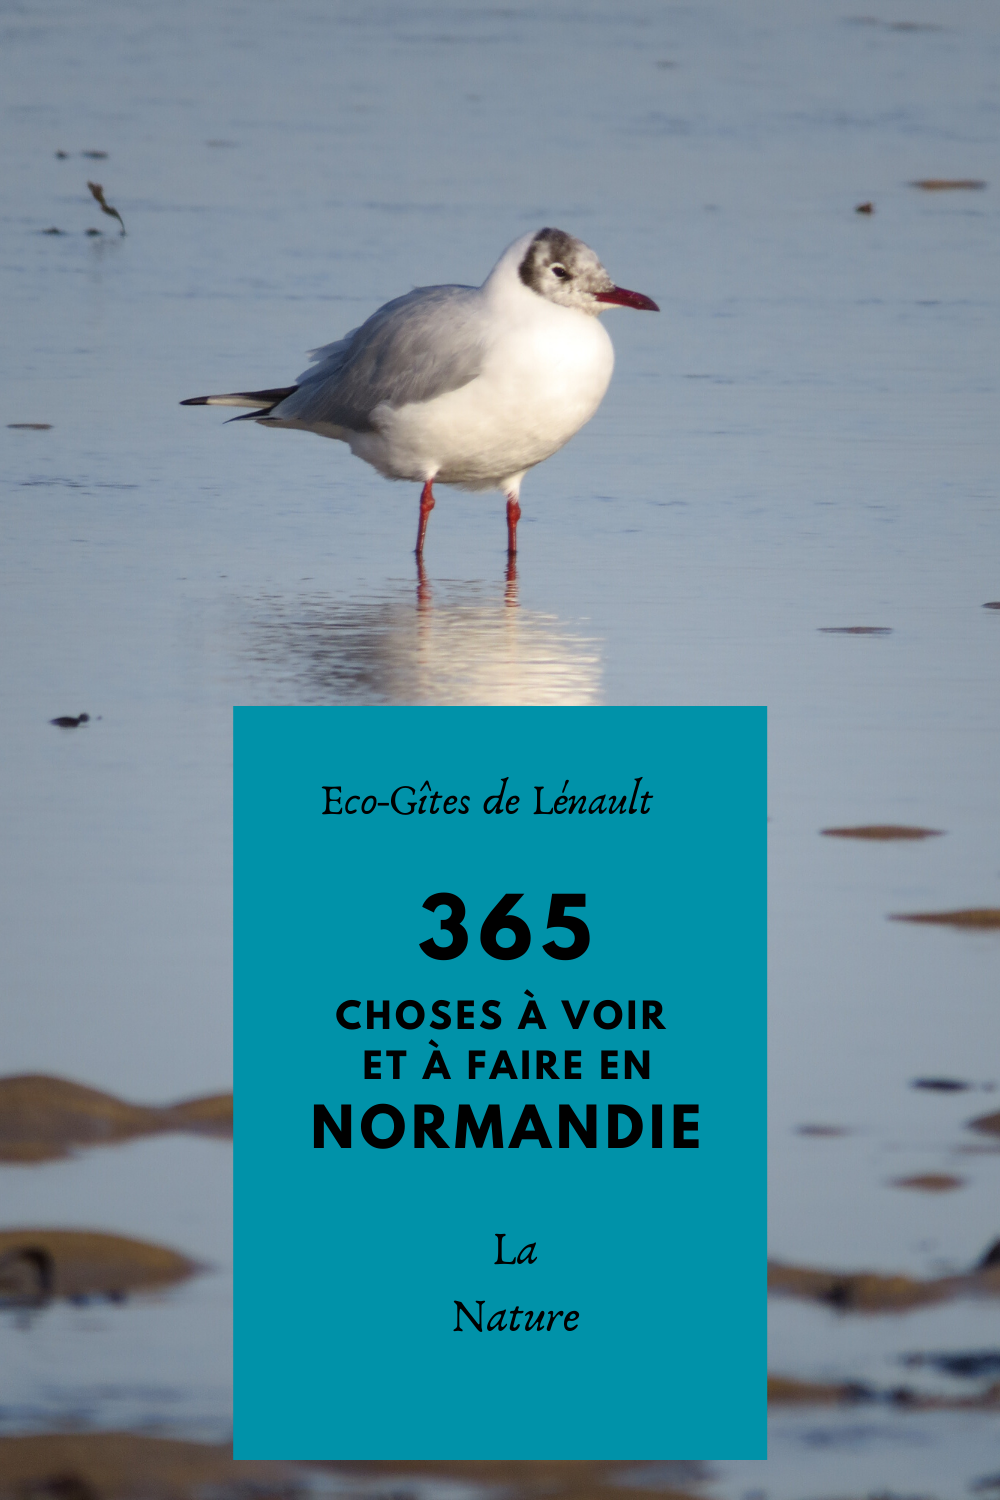 La nature de Normandie